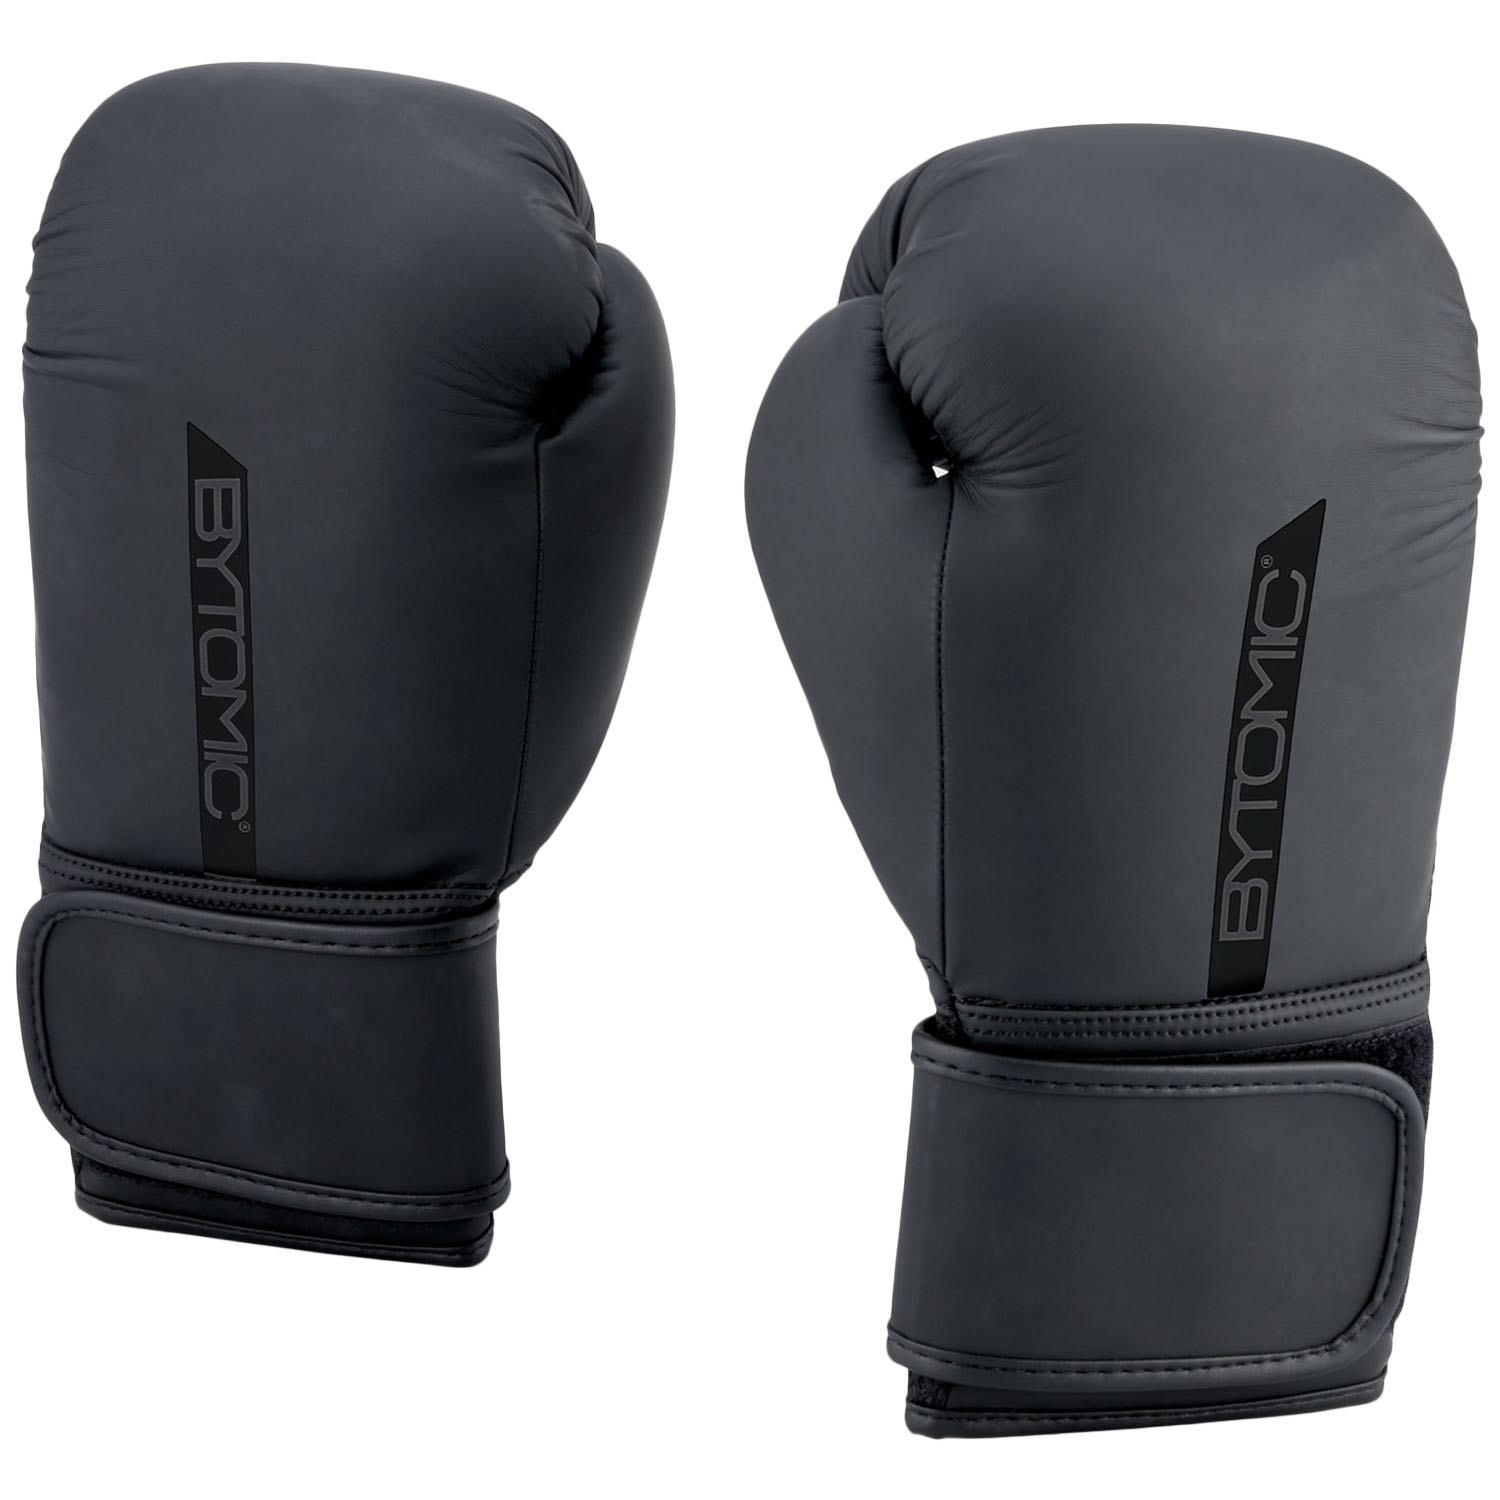 Bytomic Boxing Gloves, Red Label, black-black, 14 Oz